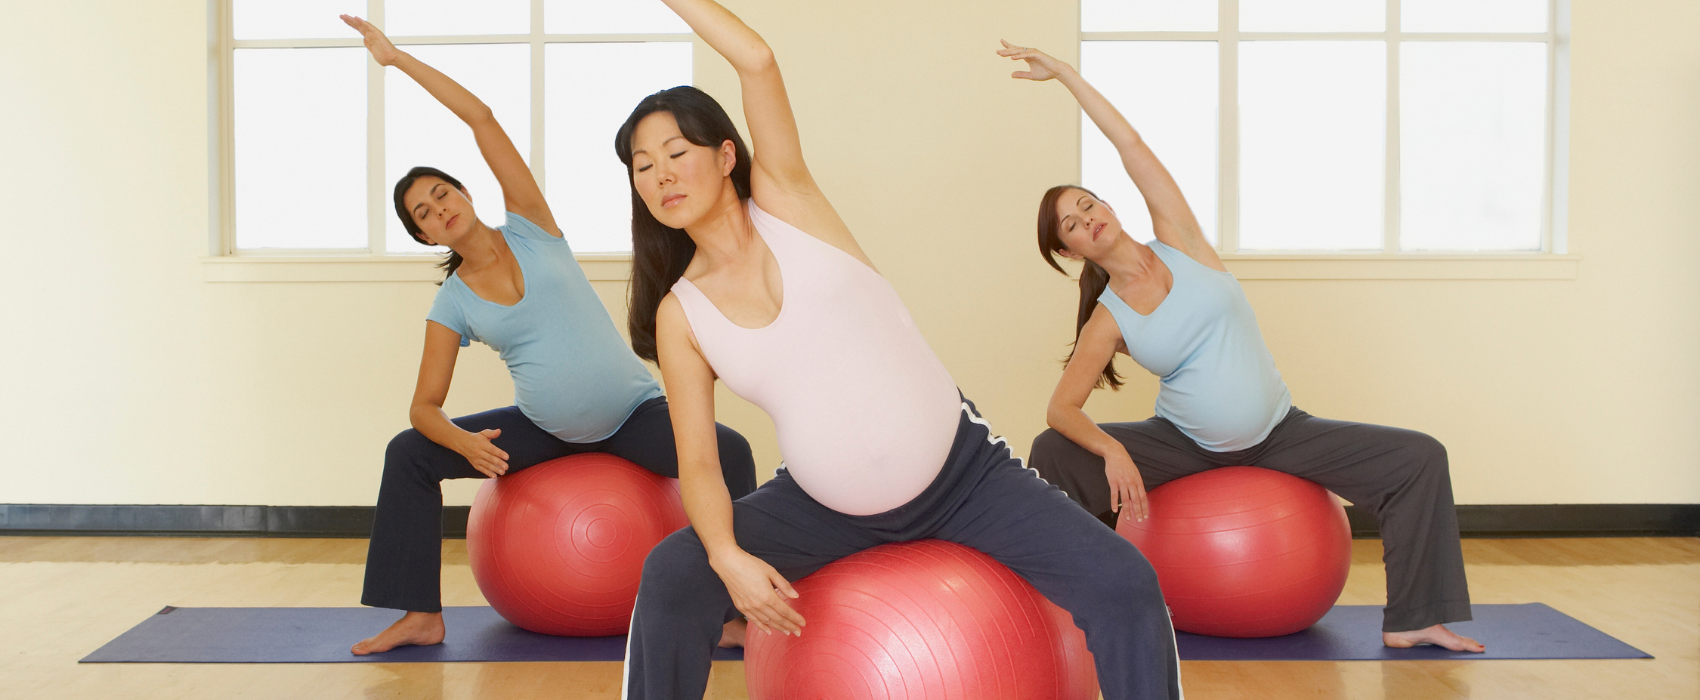 pregnant moms exercising